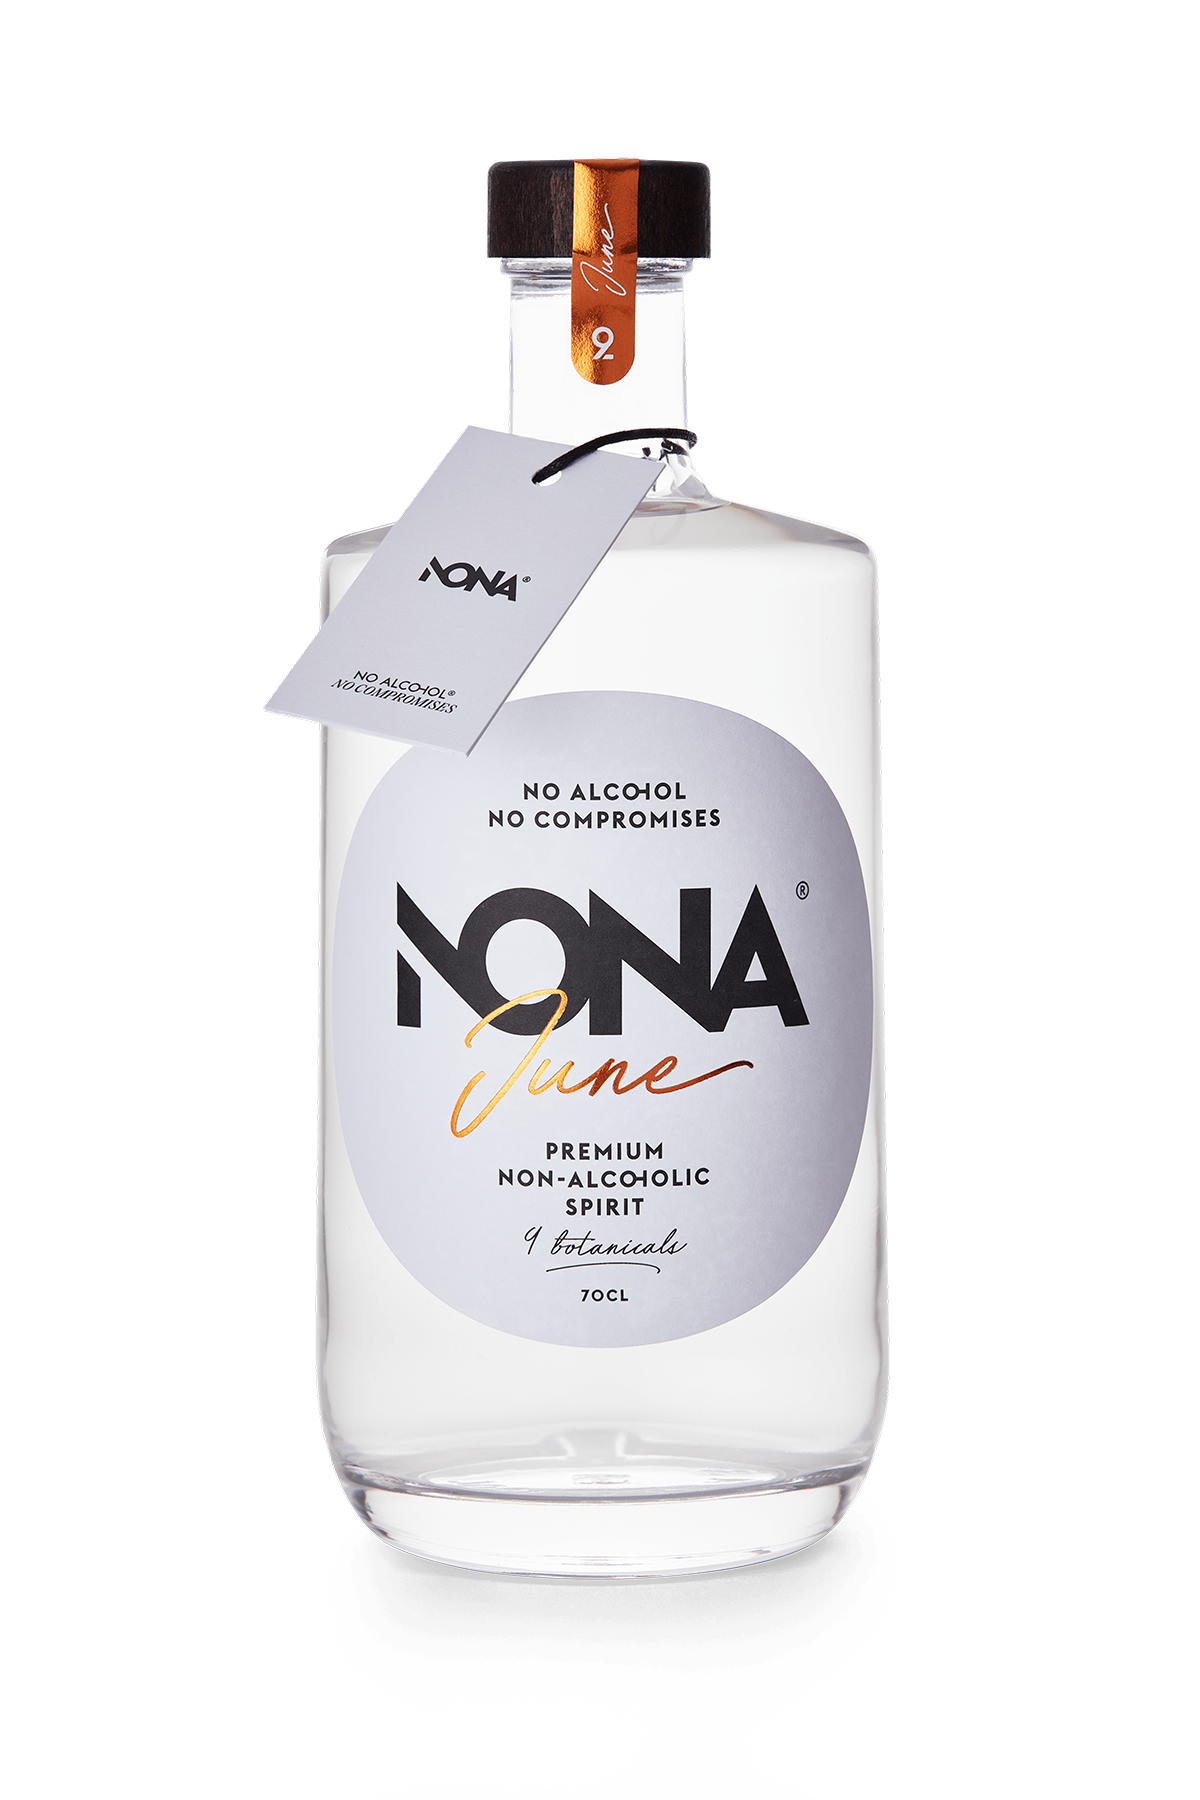 Bottle of non-alcoholic spirit June by Nona